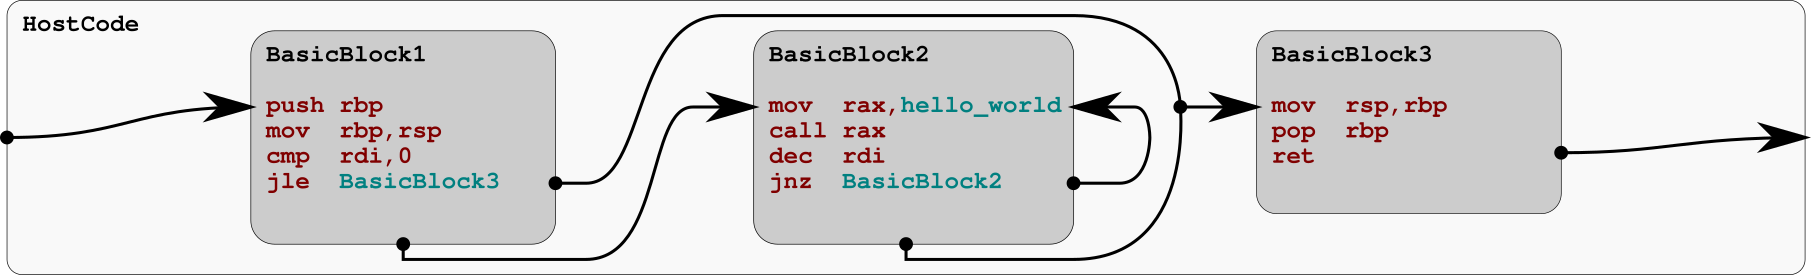 basic block 3